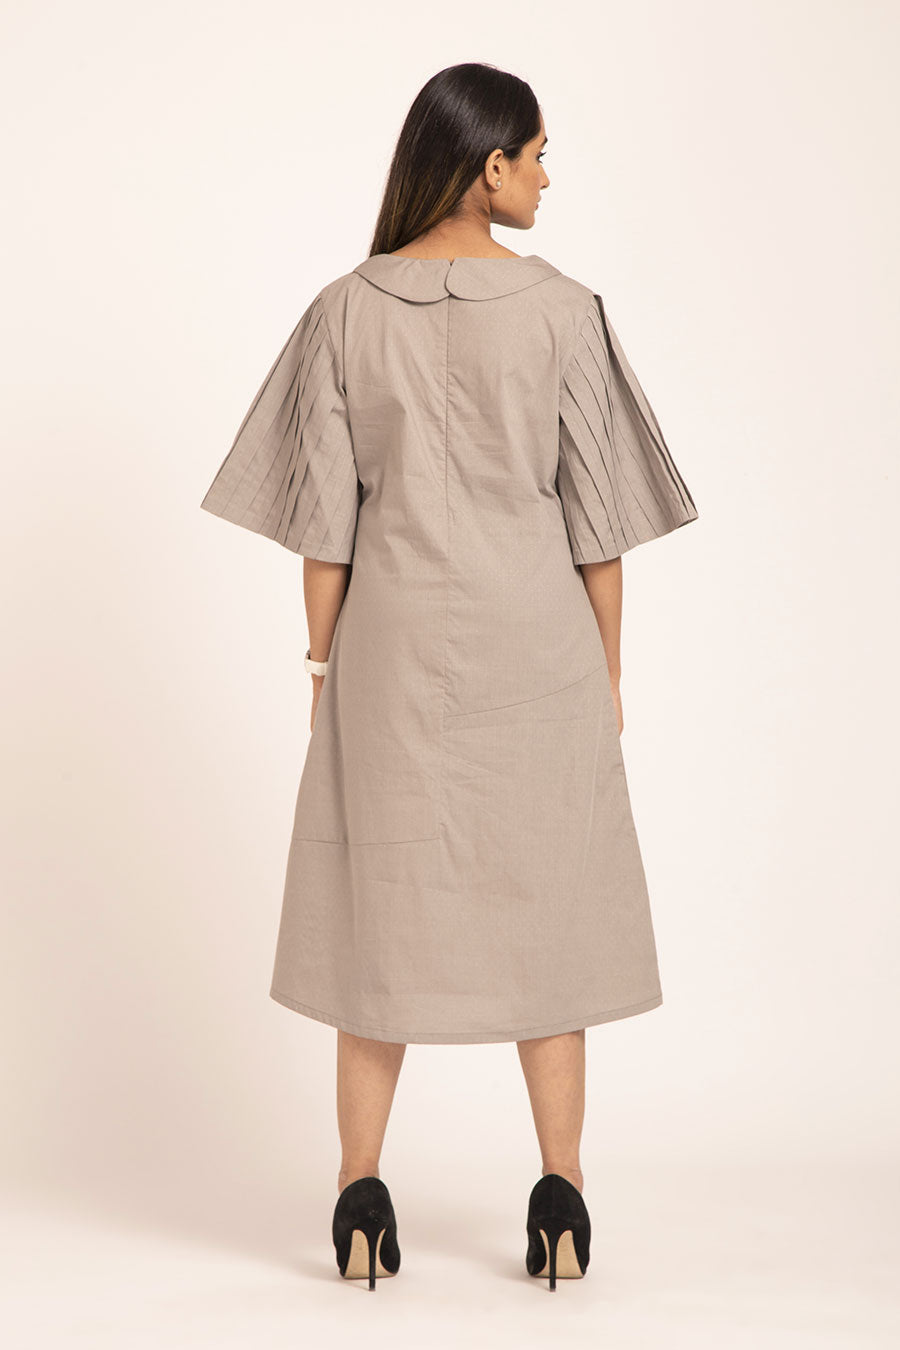 Daffodils - Grey Pleated A-Line Dress